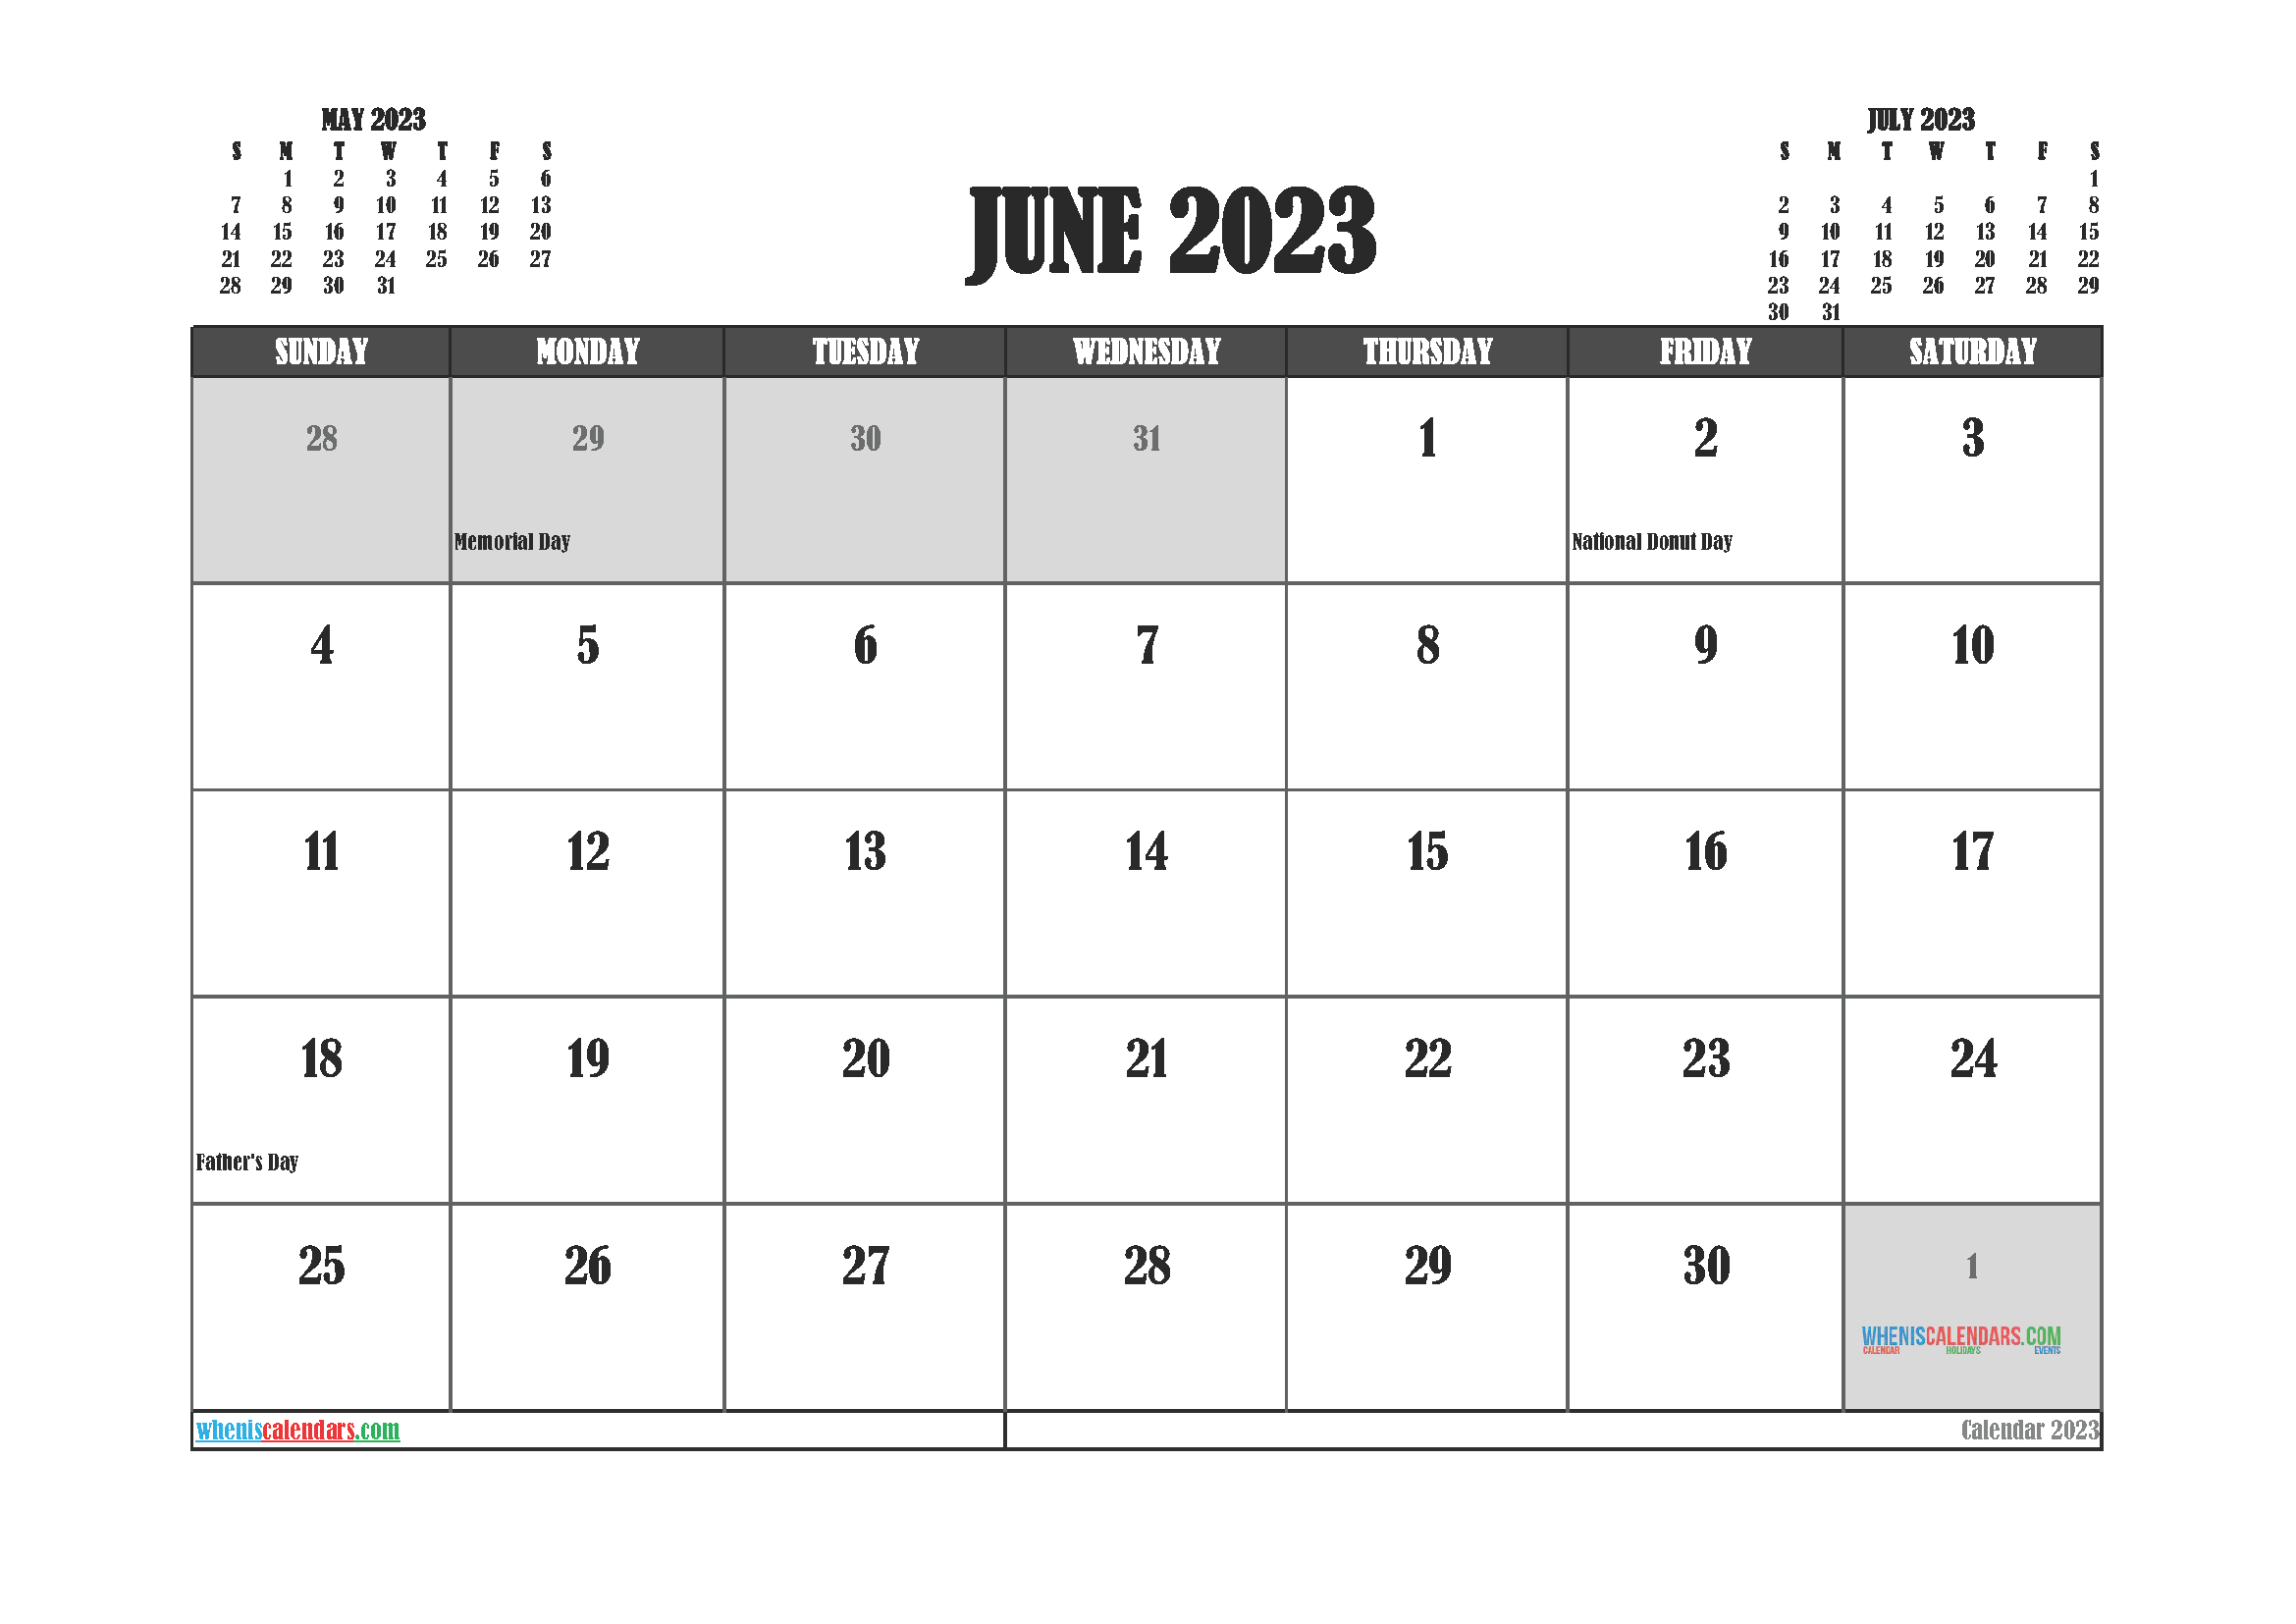 2023 -2022 Calendar Printable - April 2022 Calendar  Free Printable Calendar April 2022 To March 2023